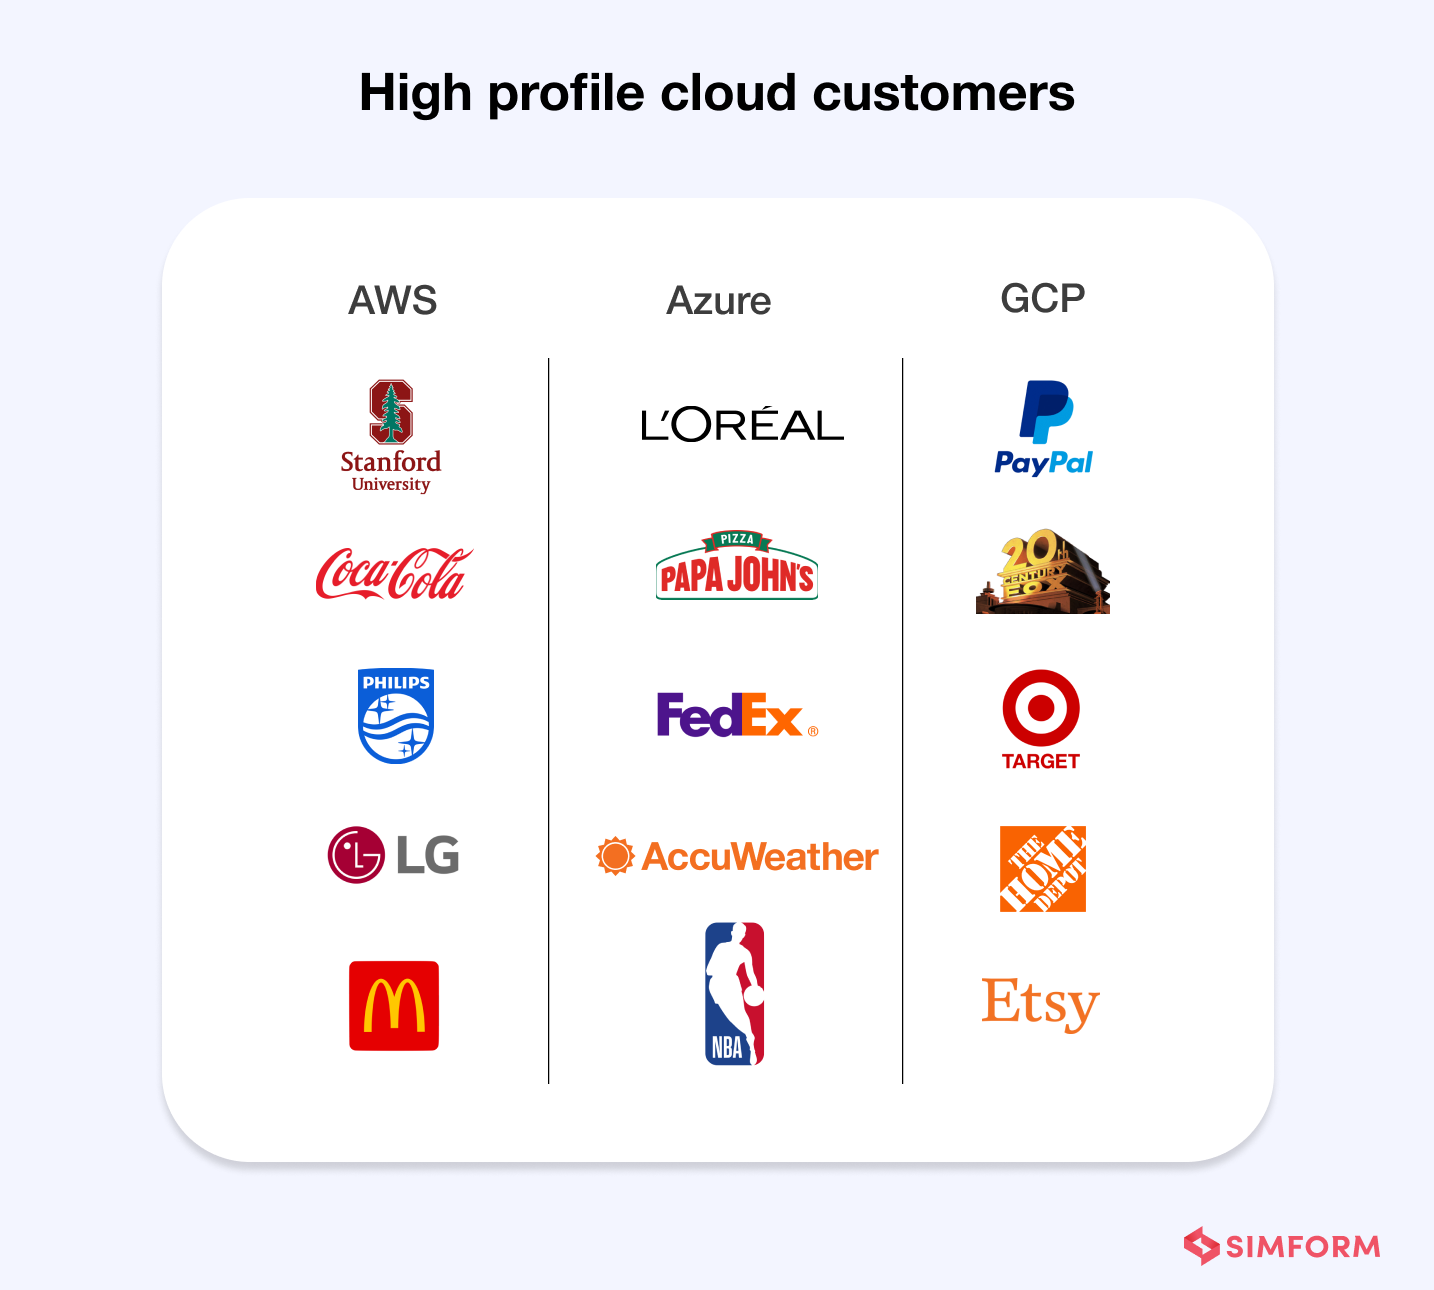 Cloud customers